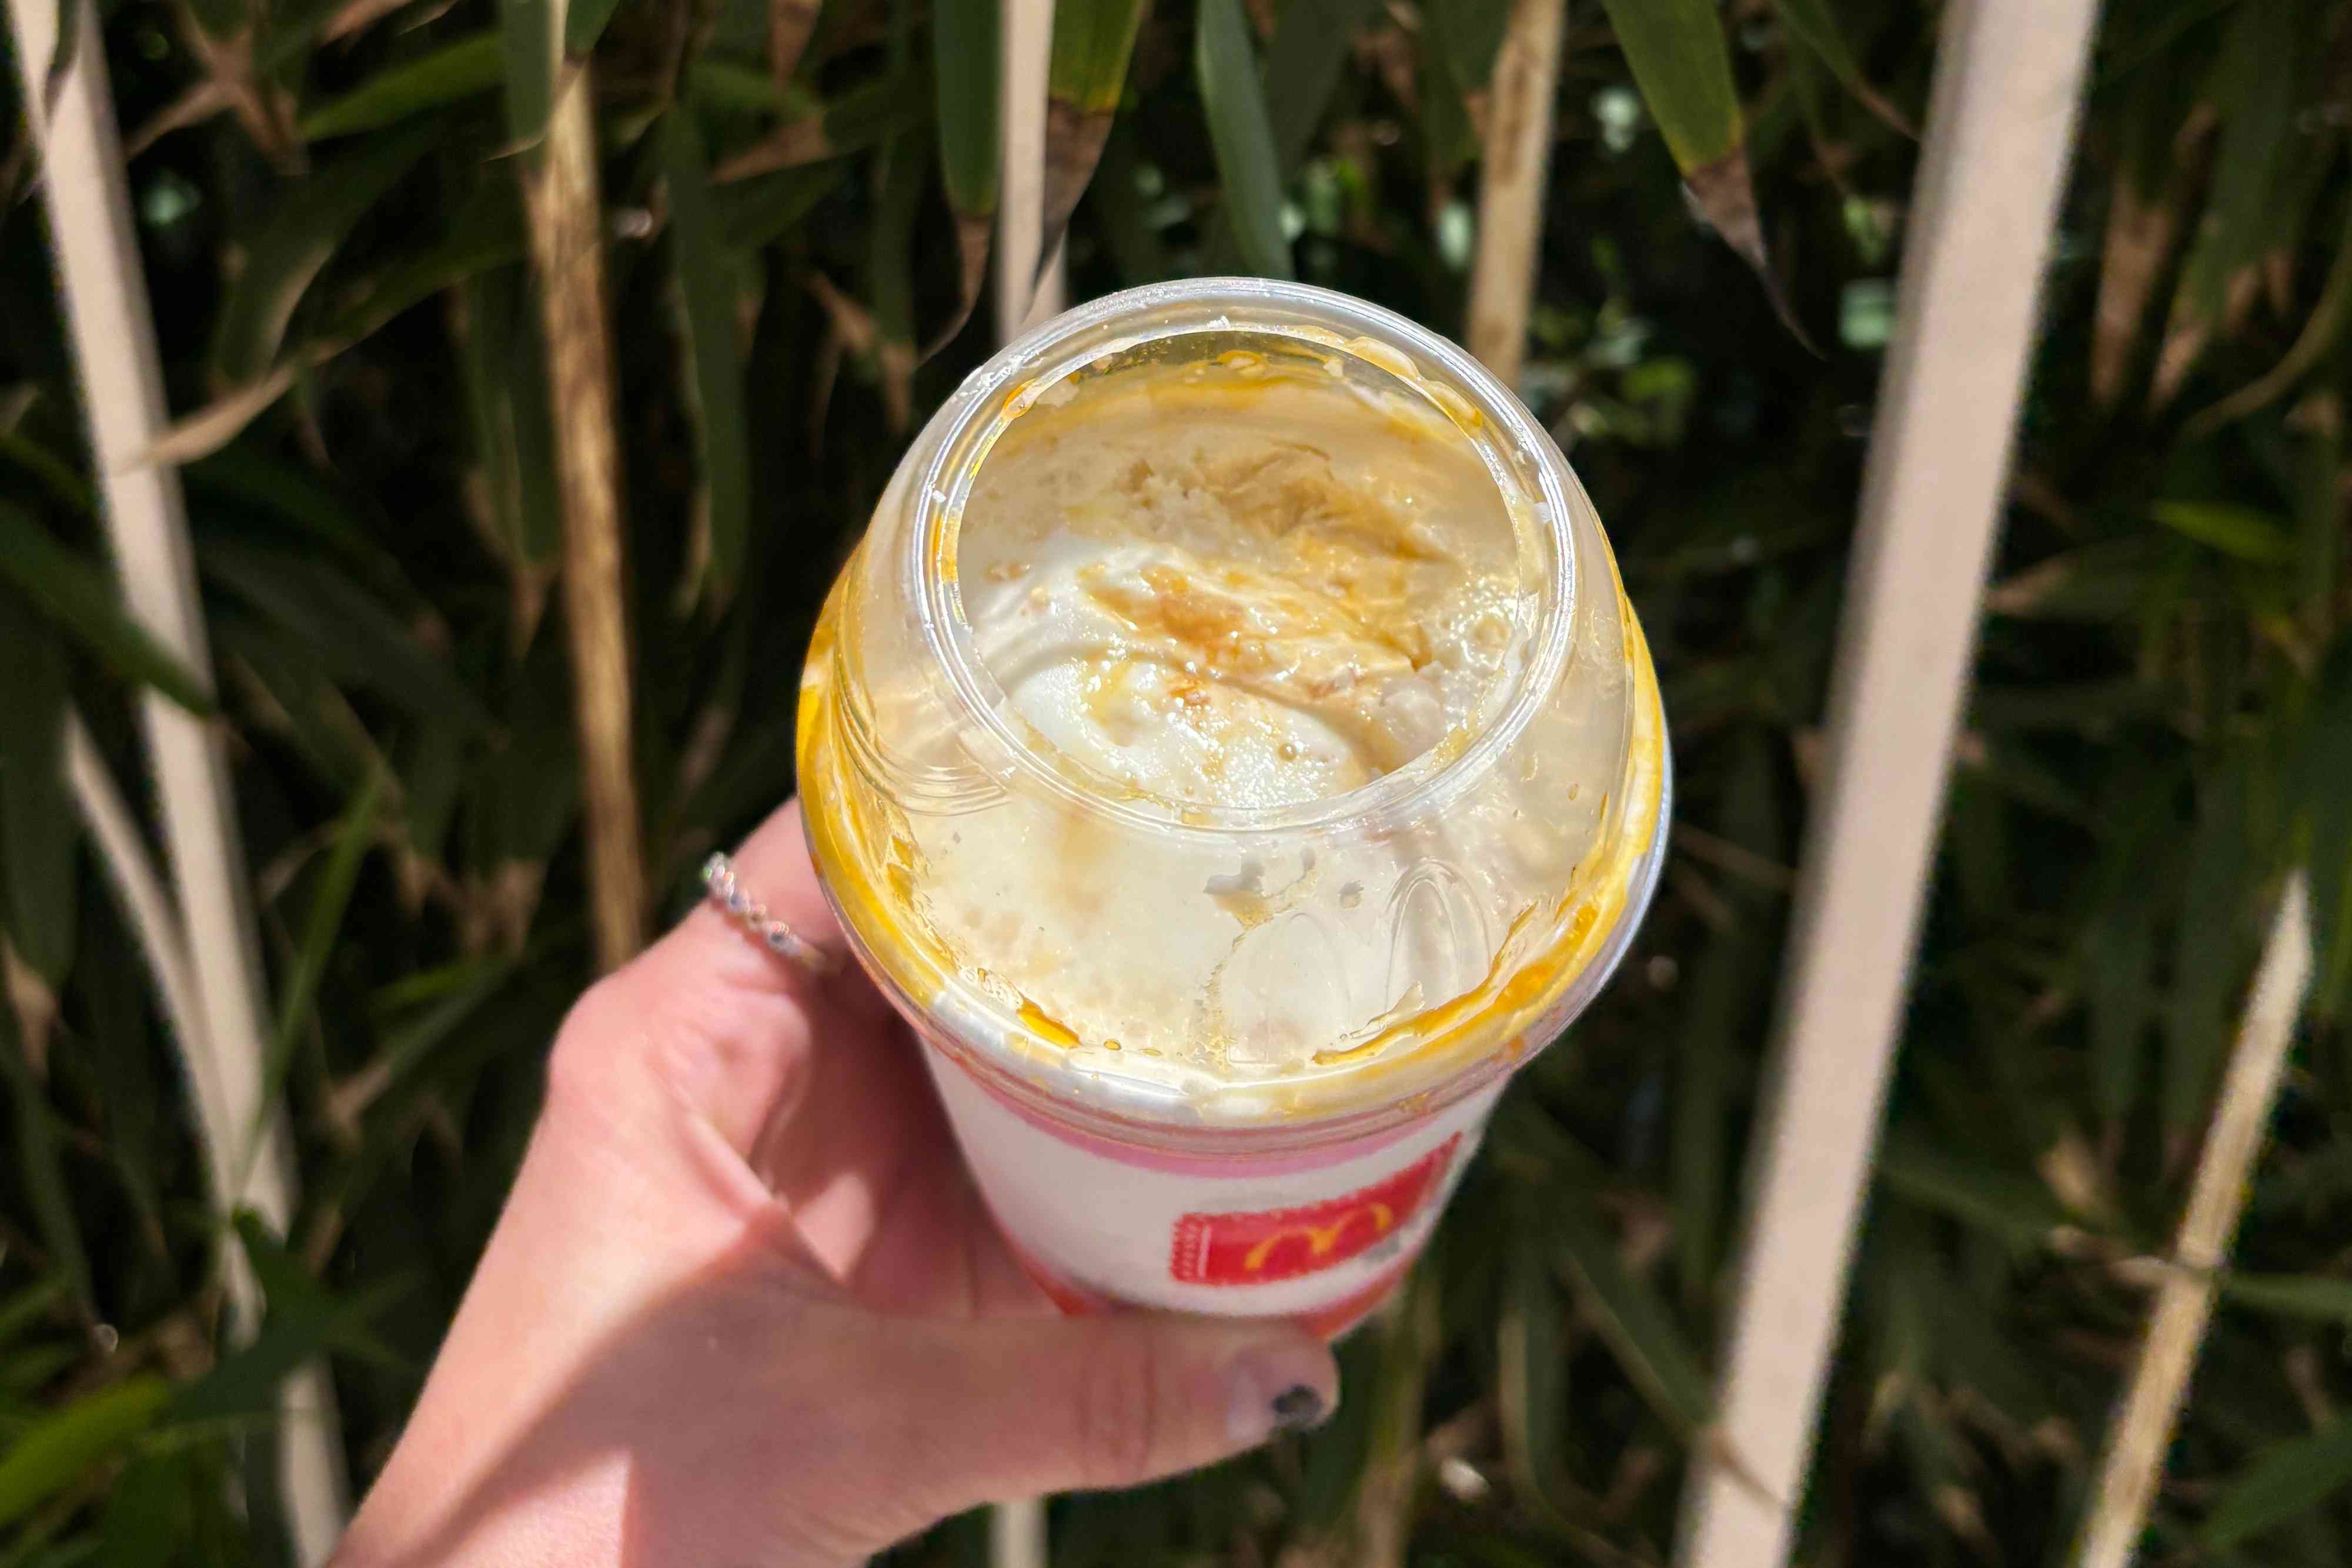 McDonald's Grandma McFlurry Is the Ultimate Comfort Treat—Here's What It Tastes Like